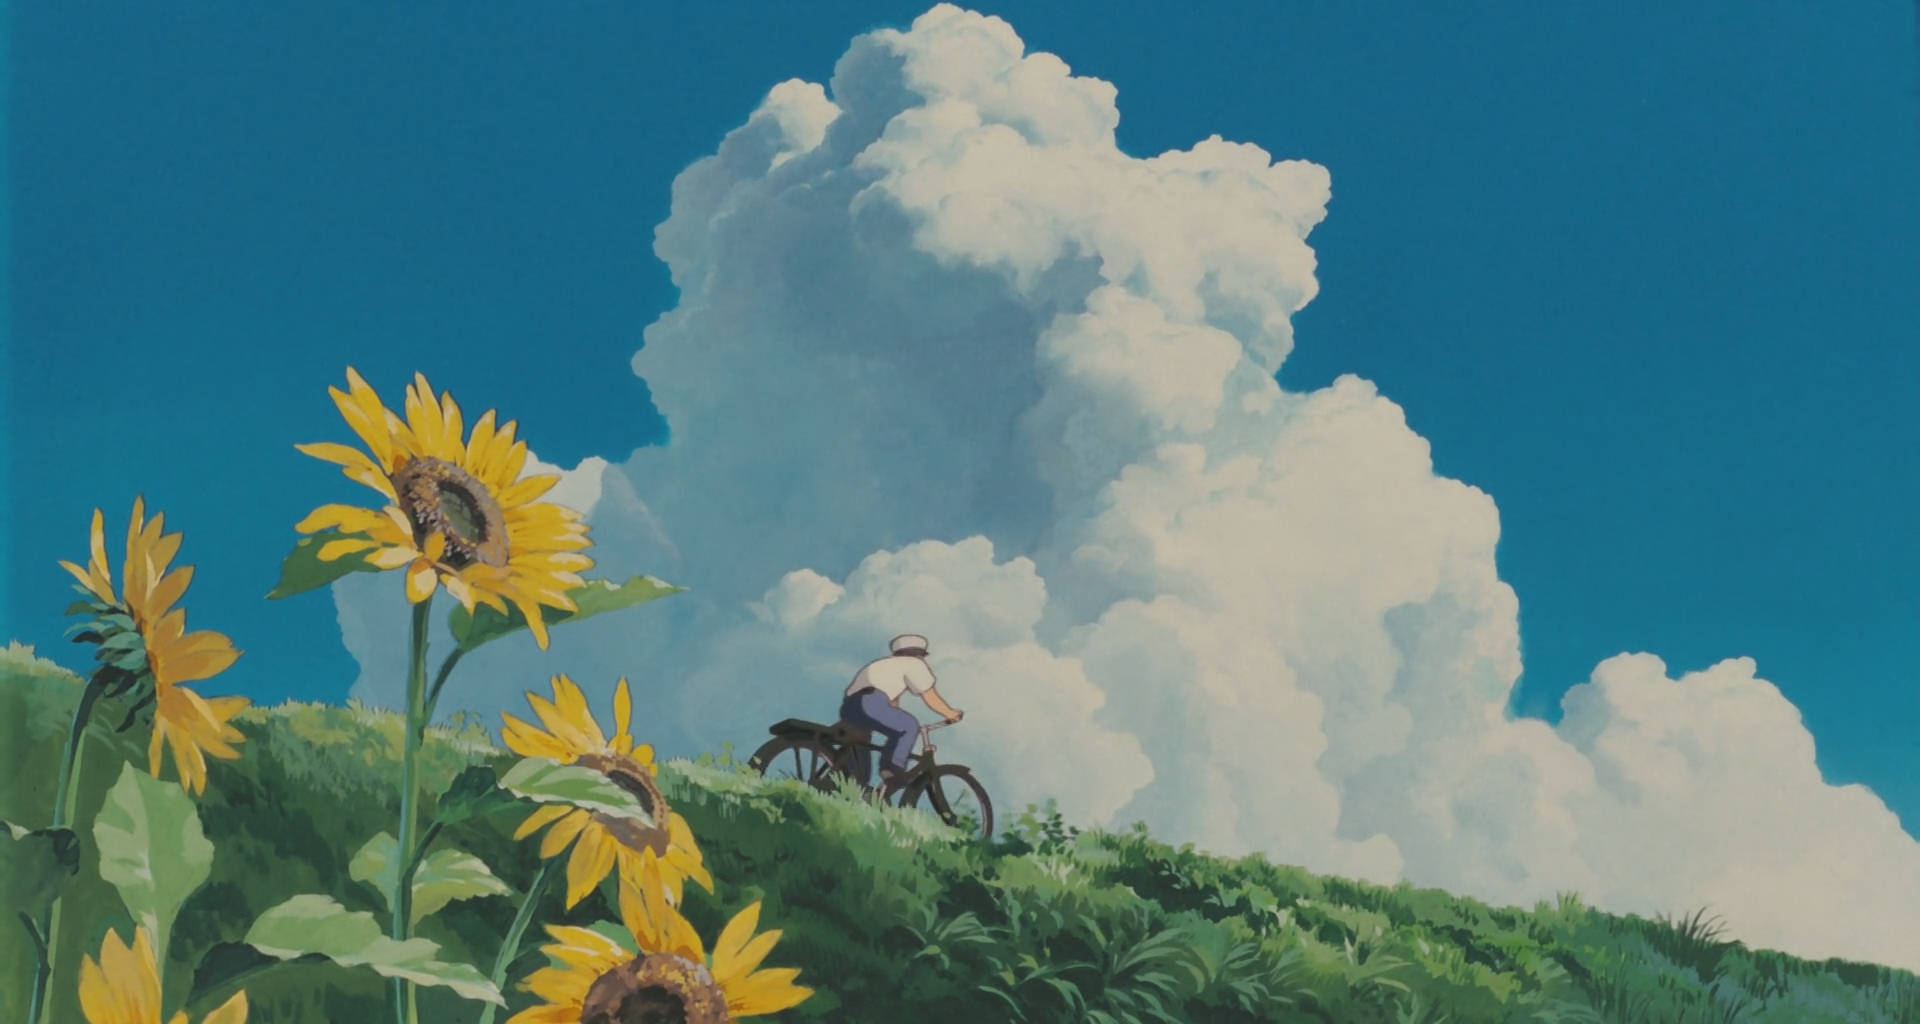 Studio Ghibli Scenery With Sunflowers Wallpaper